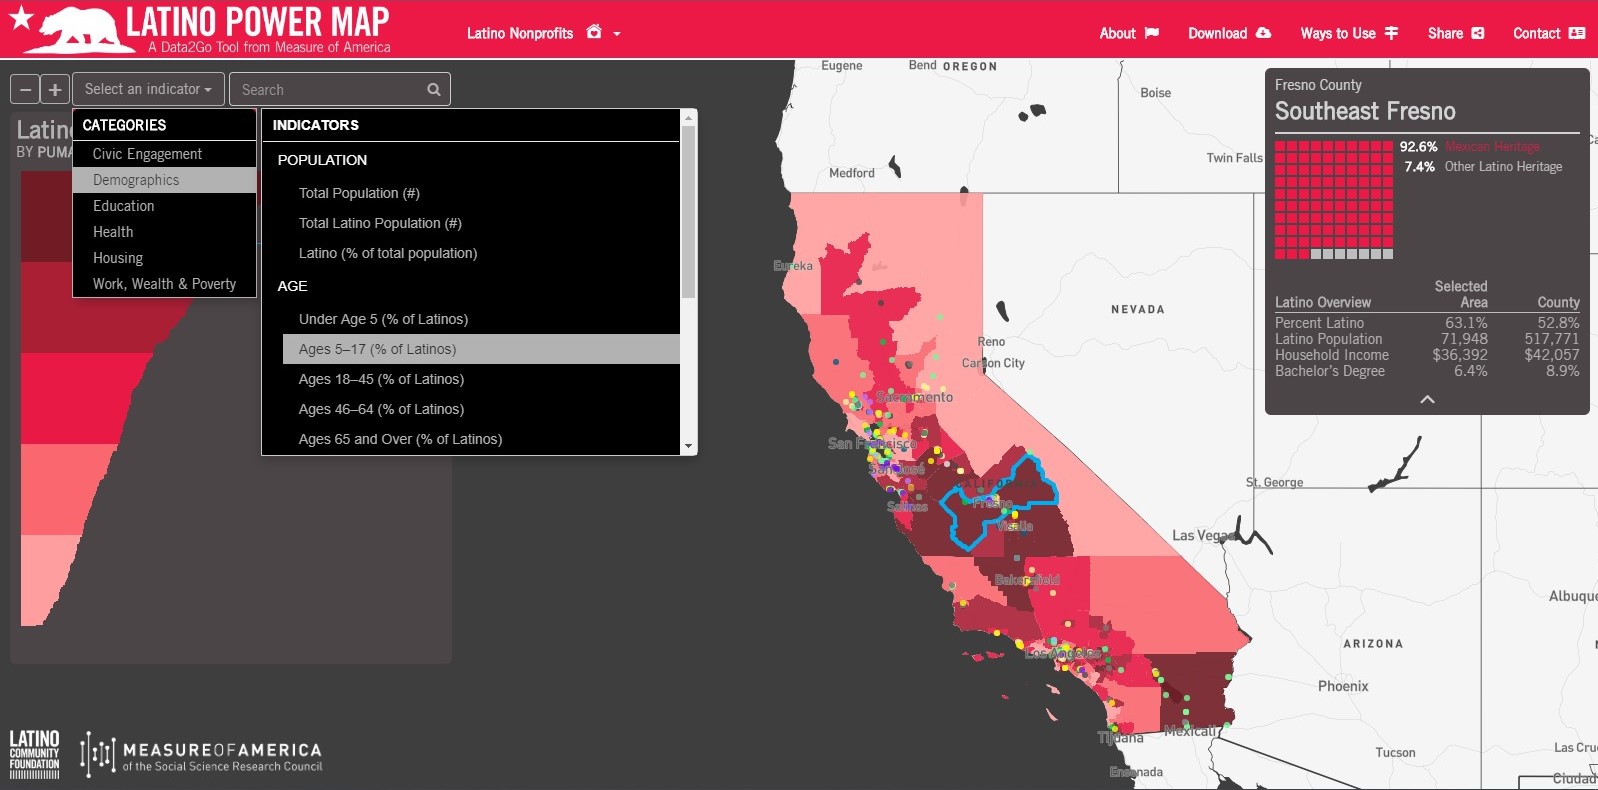 California Latino Power Map's Menu System